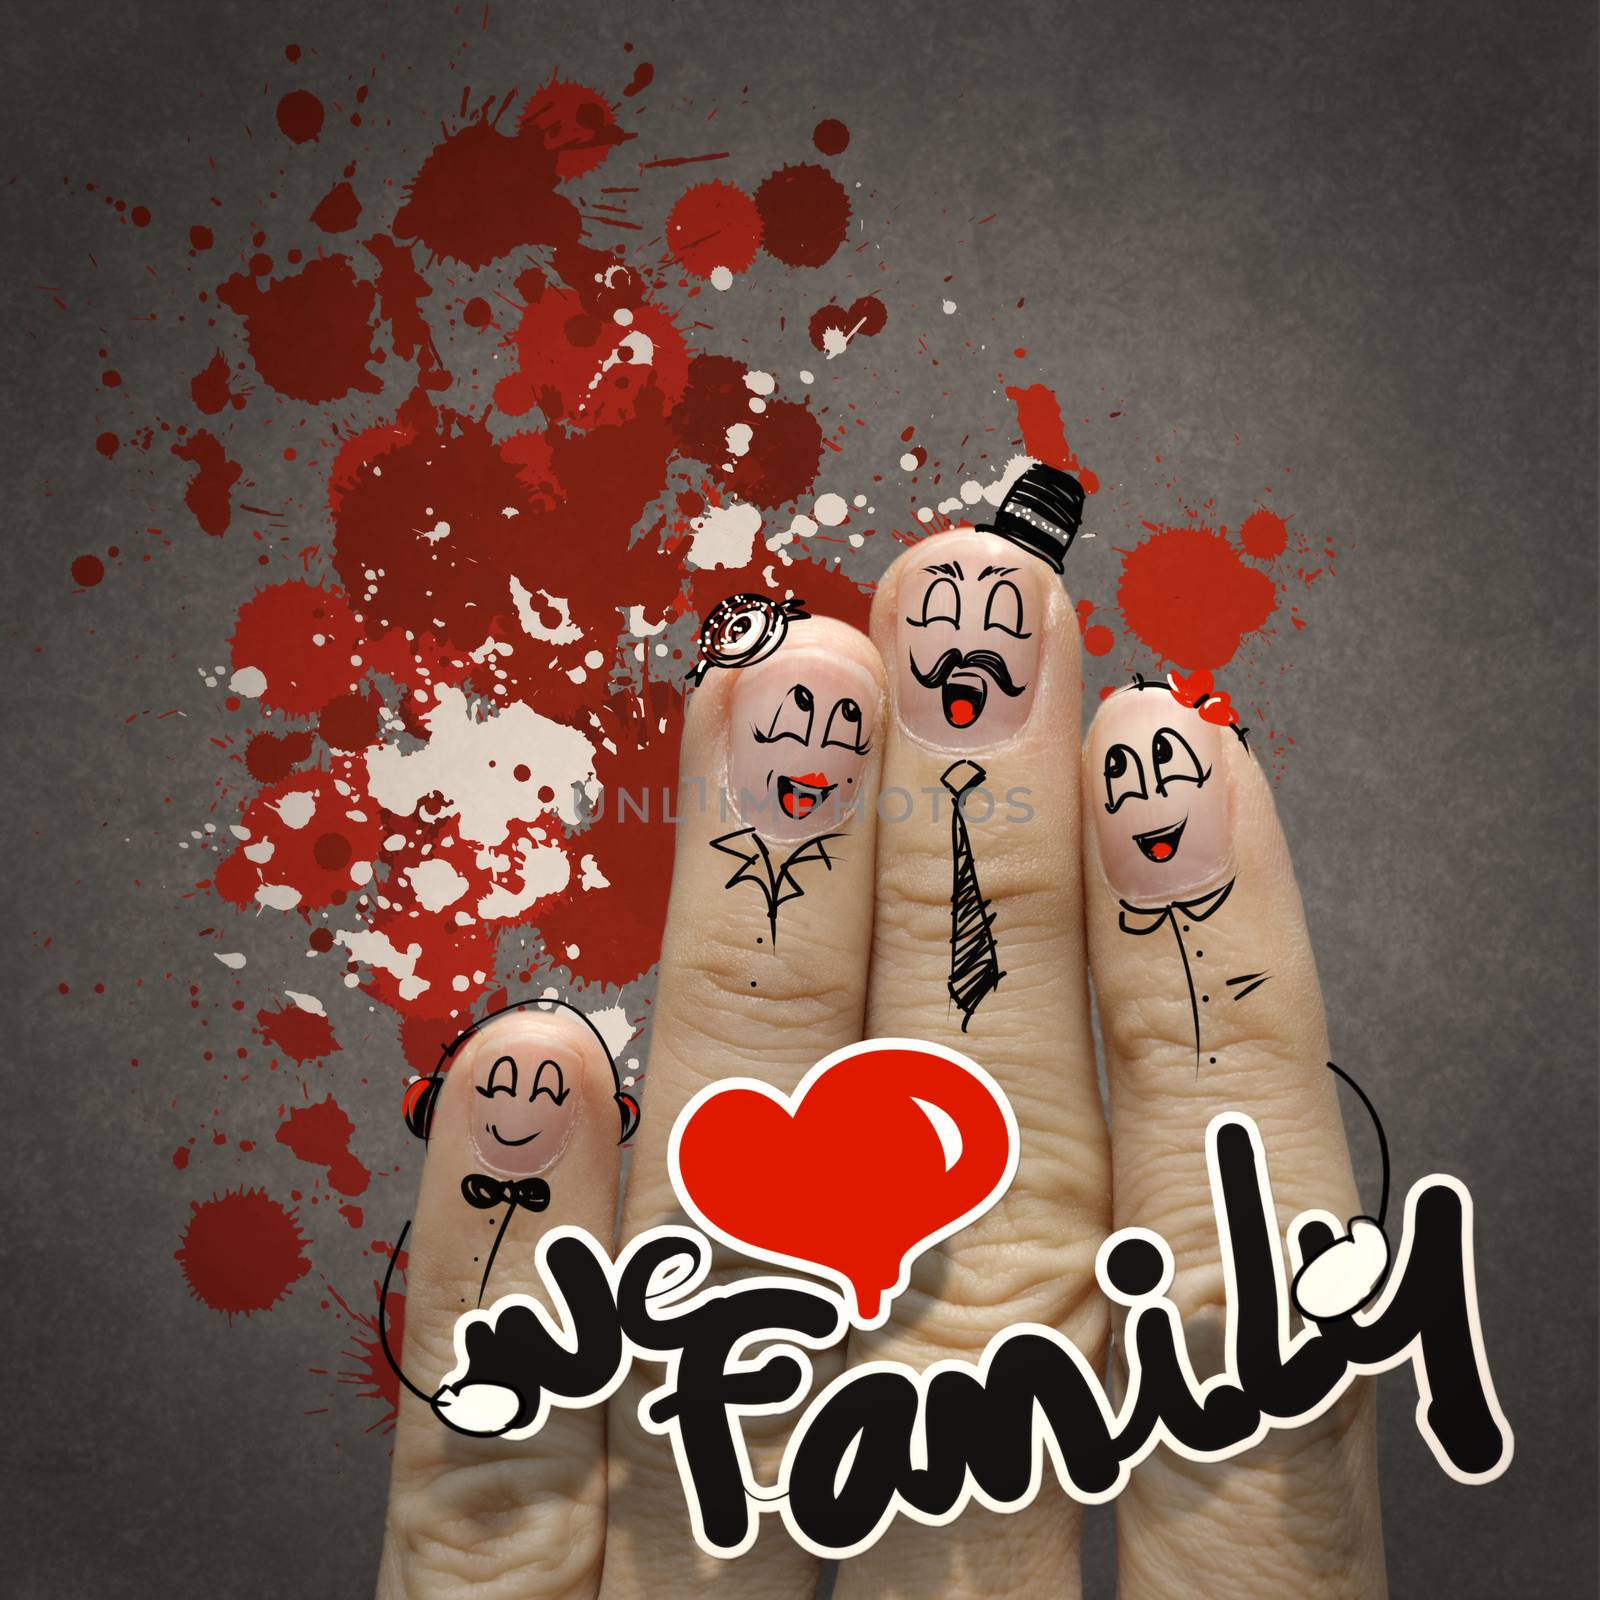 the happy finger family holding we love family word on splash background